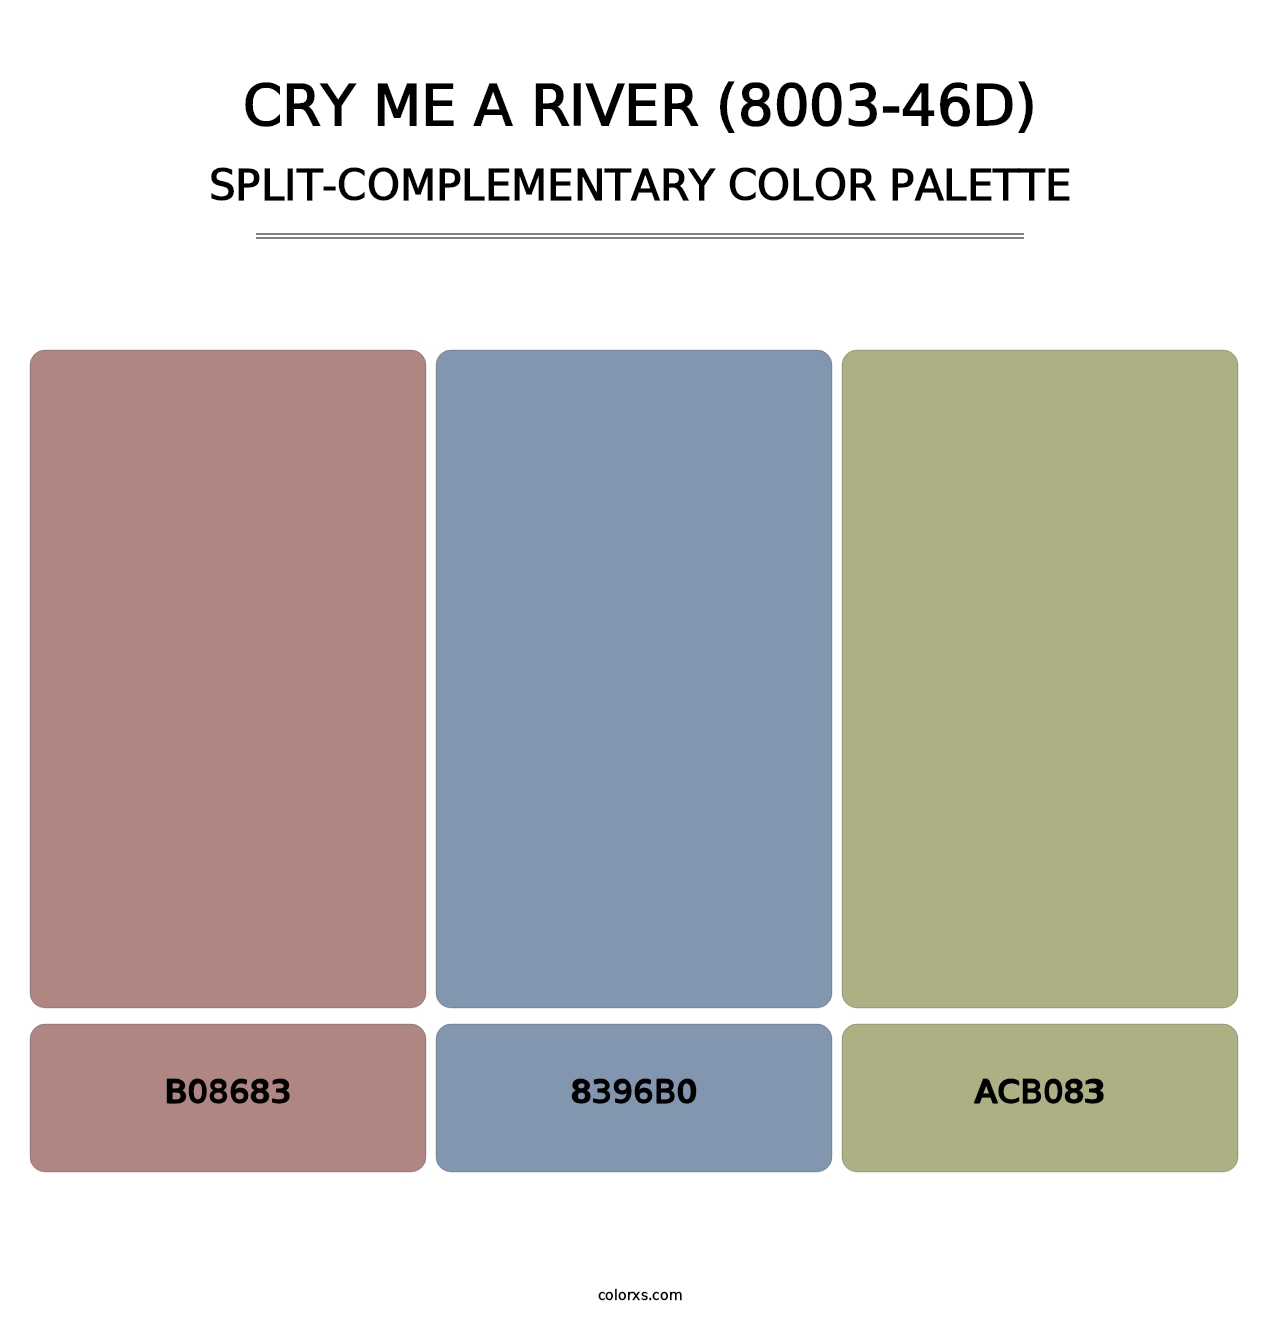 Cry Me a River (8003-46D) - Split-Complementary Color Palette